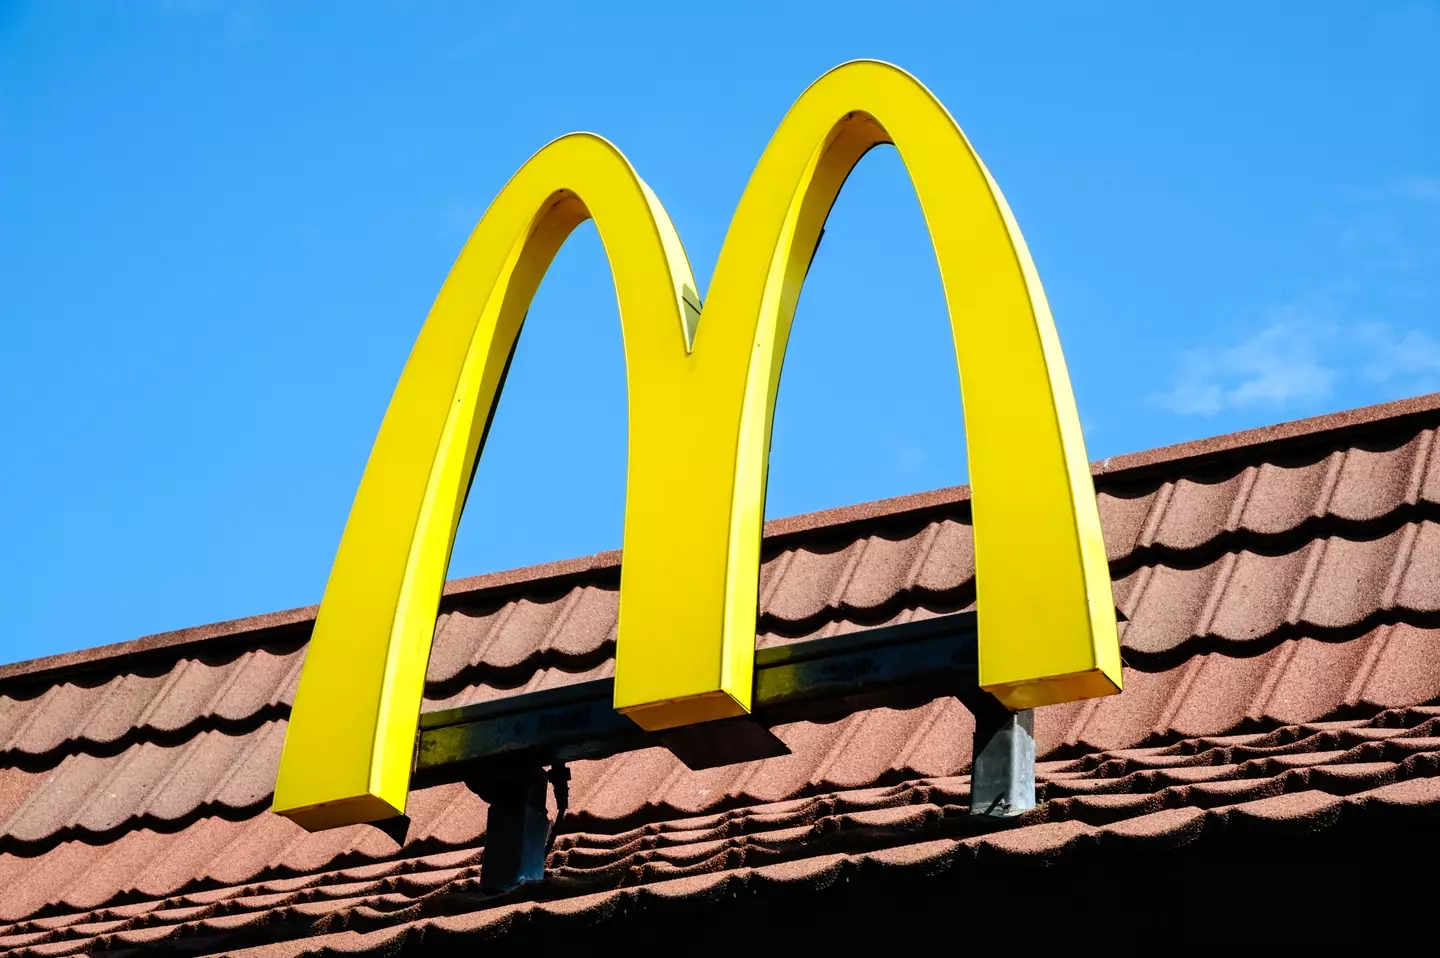 McDonalds has 850 stores in Russia.